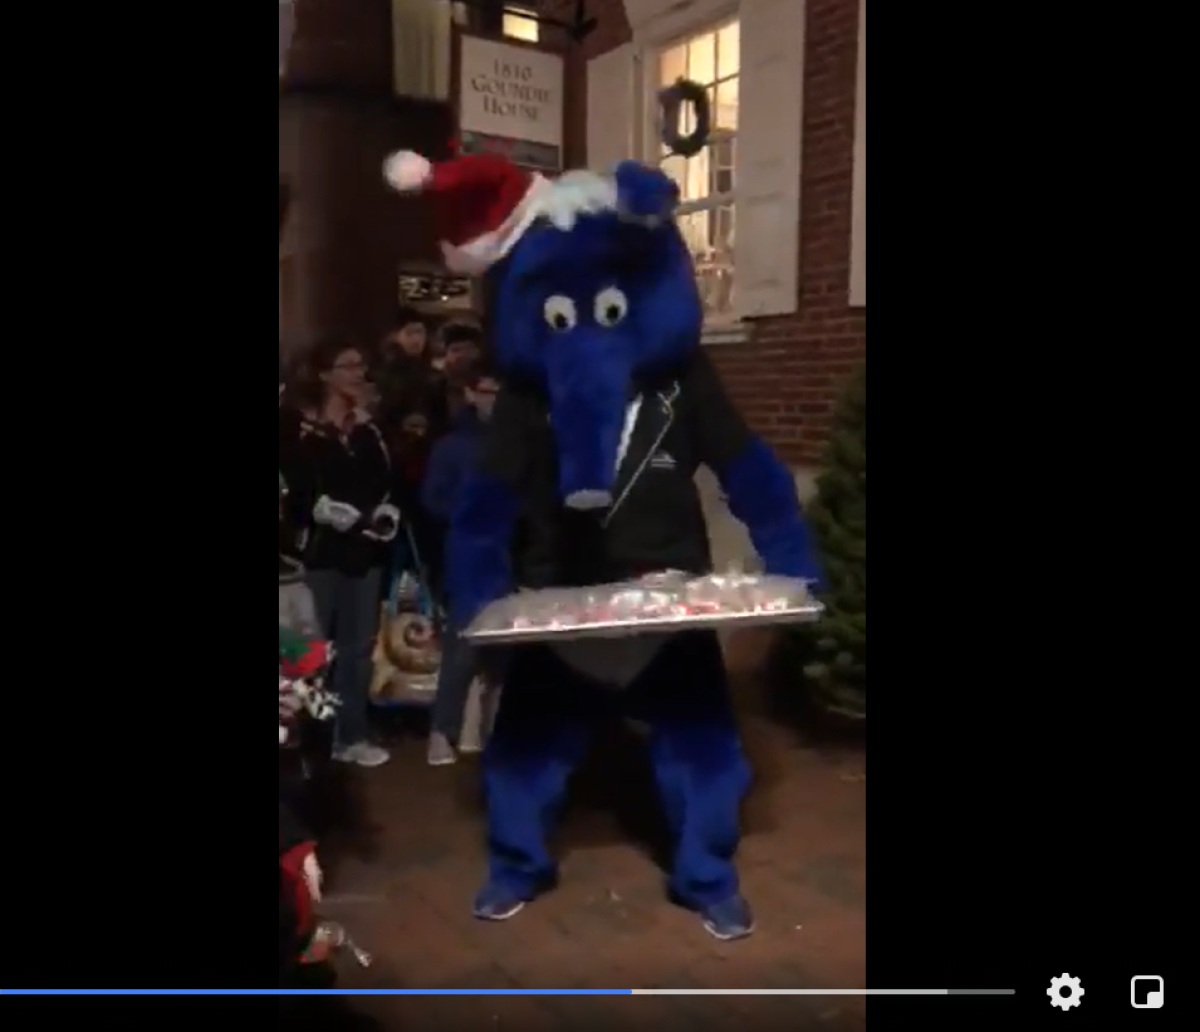 Aardvark Sports Shop's blue aardvark mascot distributed treats during a previous live Advent calendar event.